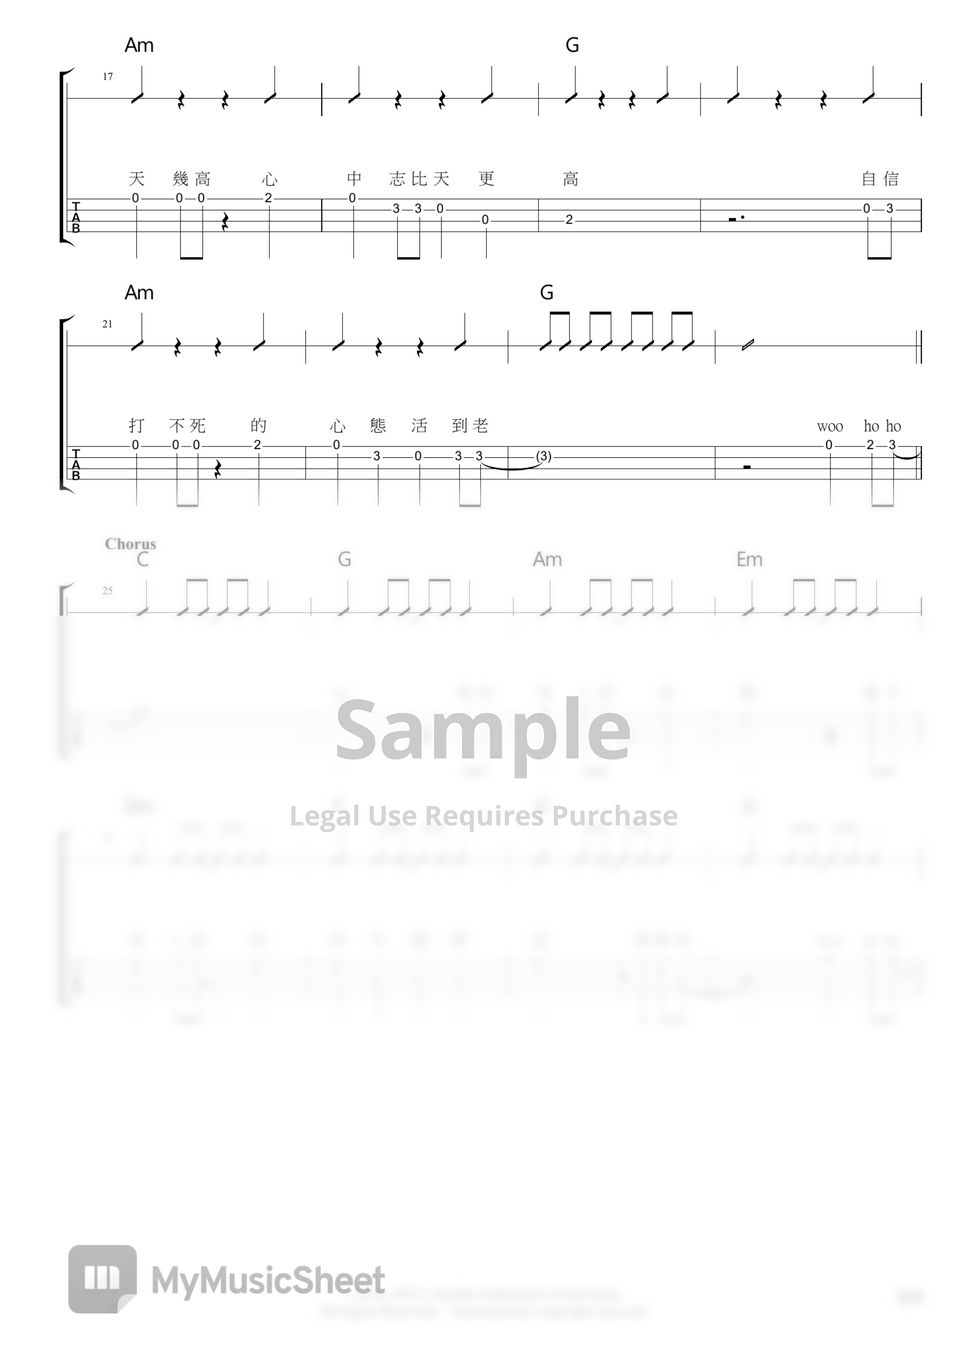 Beyond - 不再猶豫 - ukulele (duet) by UFHK